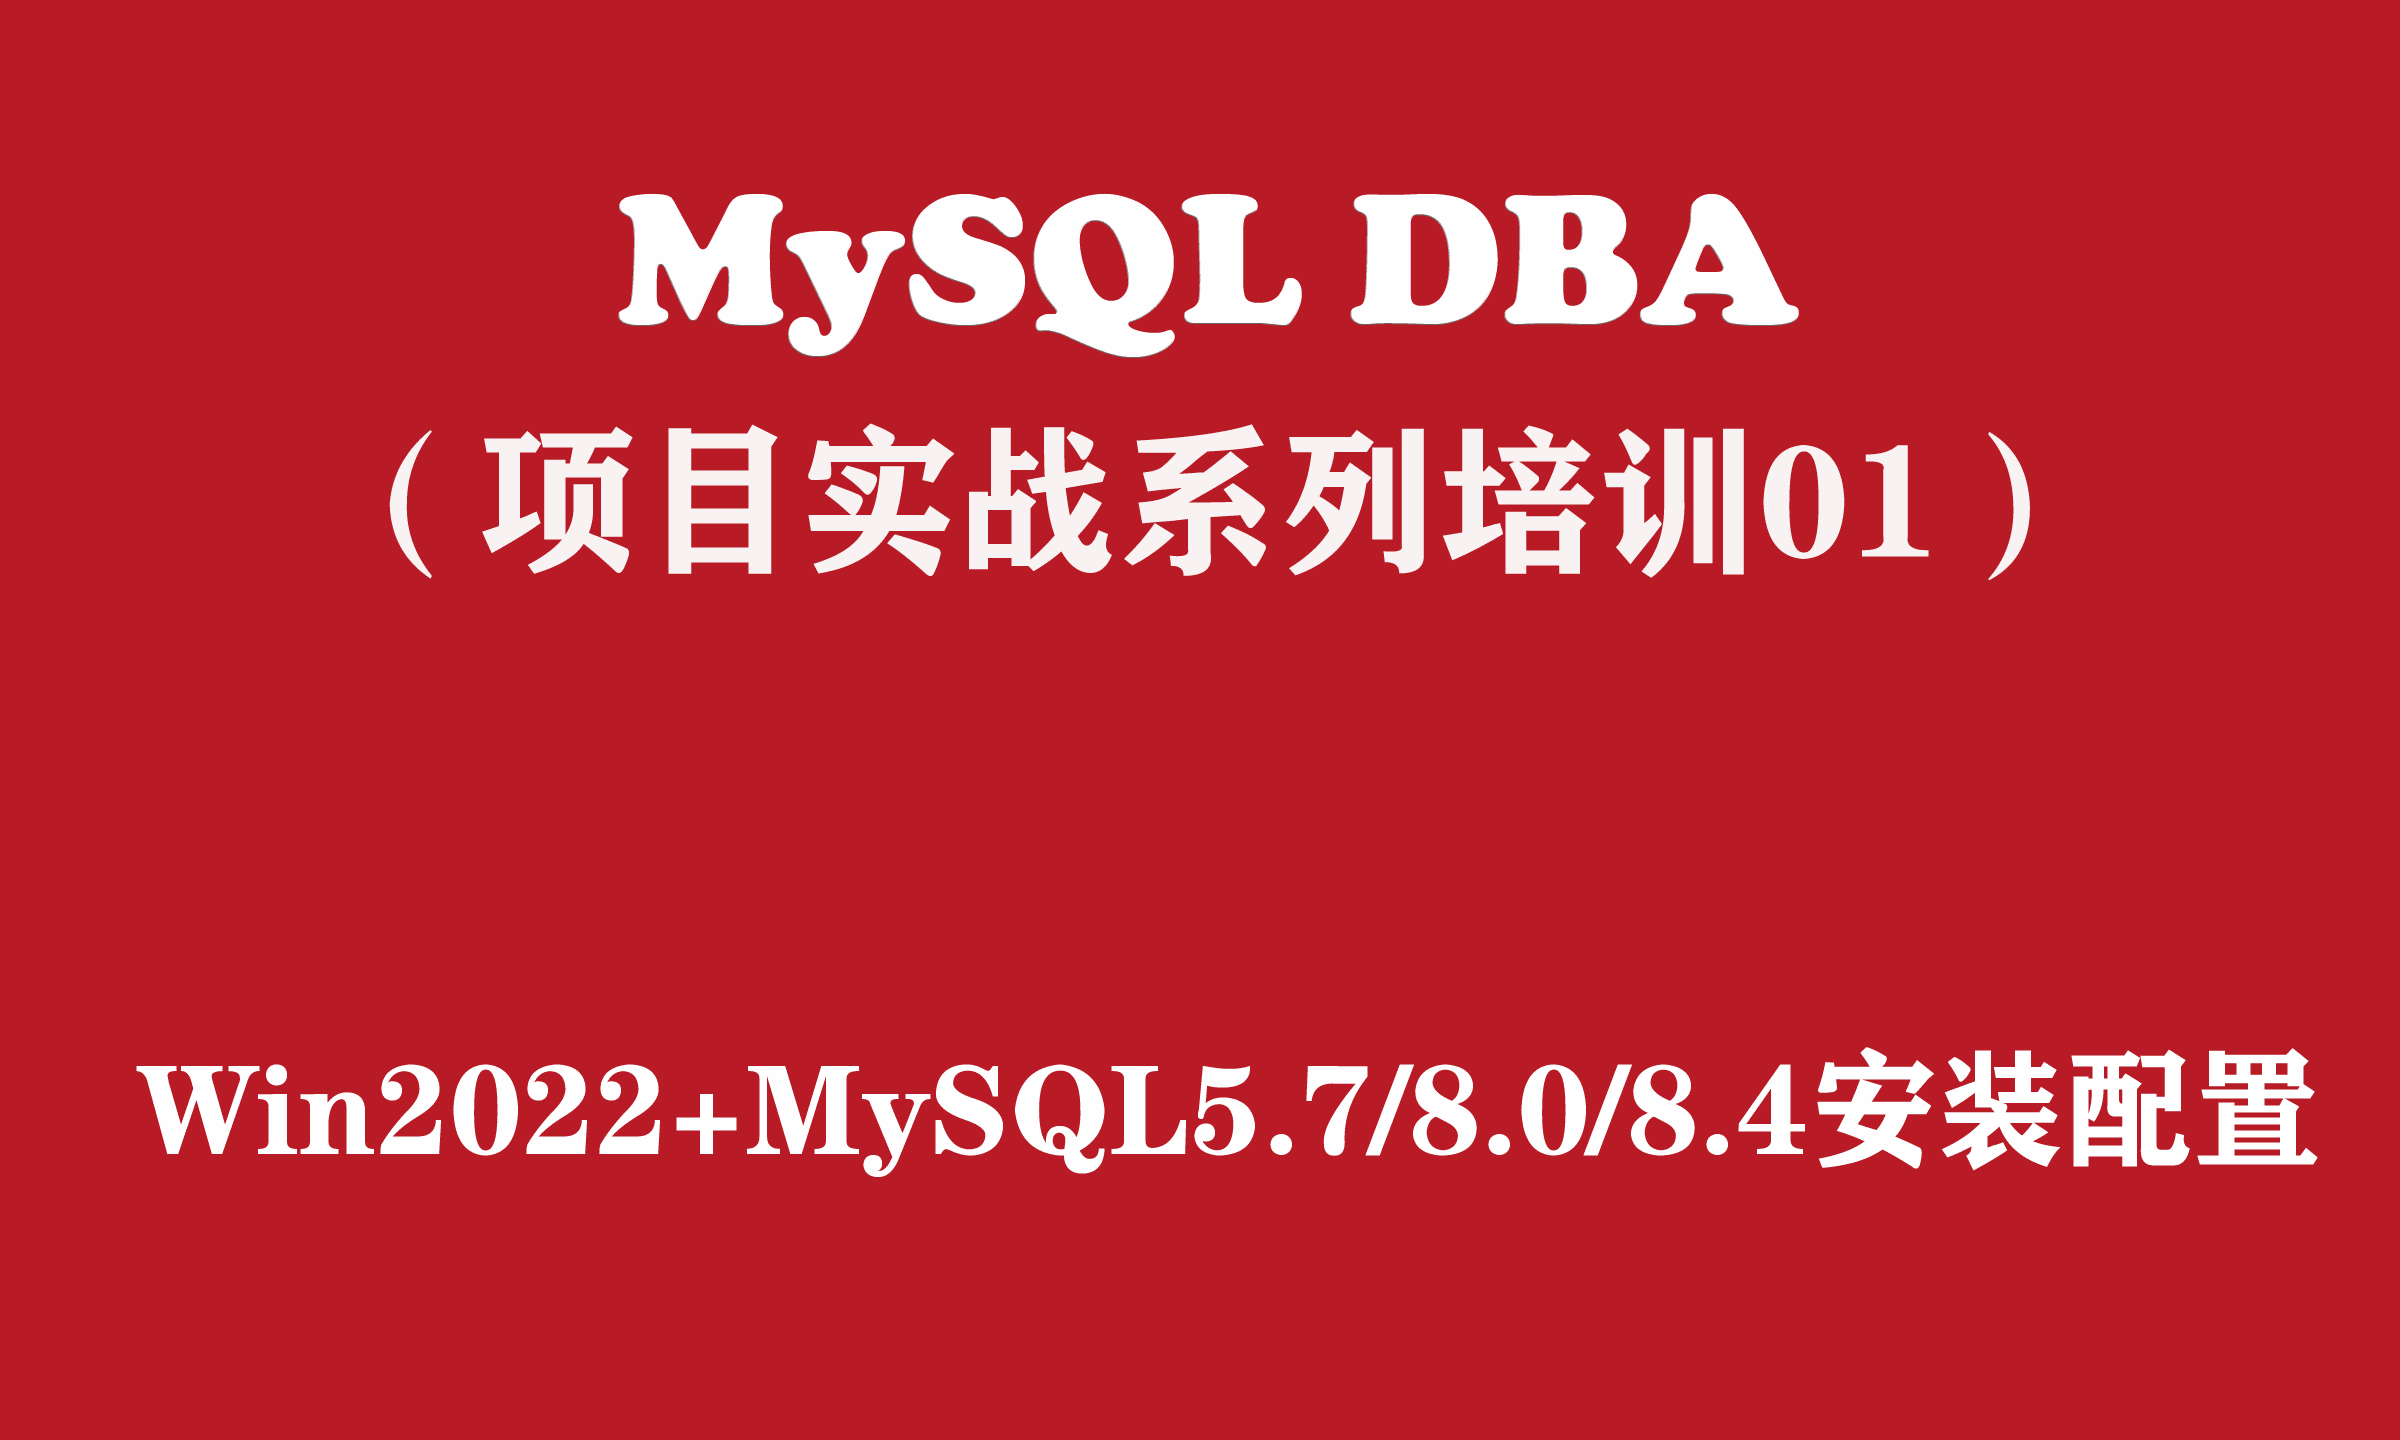  Win2022+MySQL 5.7/8.0/8.4 Installation Configuration [MySQL DBA Practical Training Series 01]